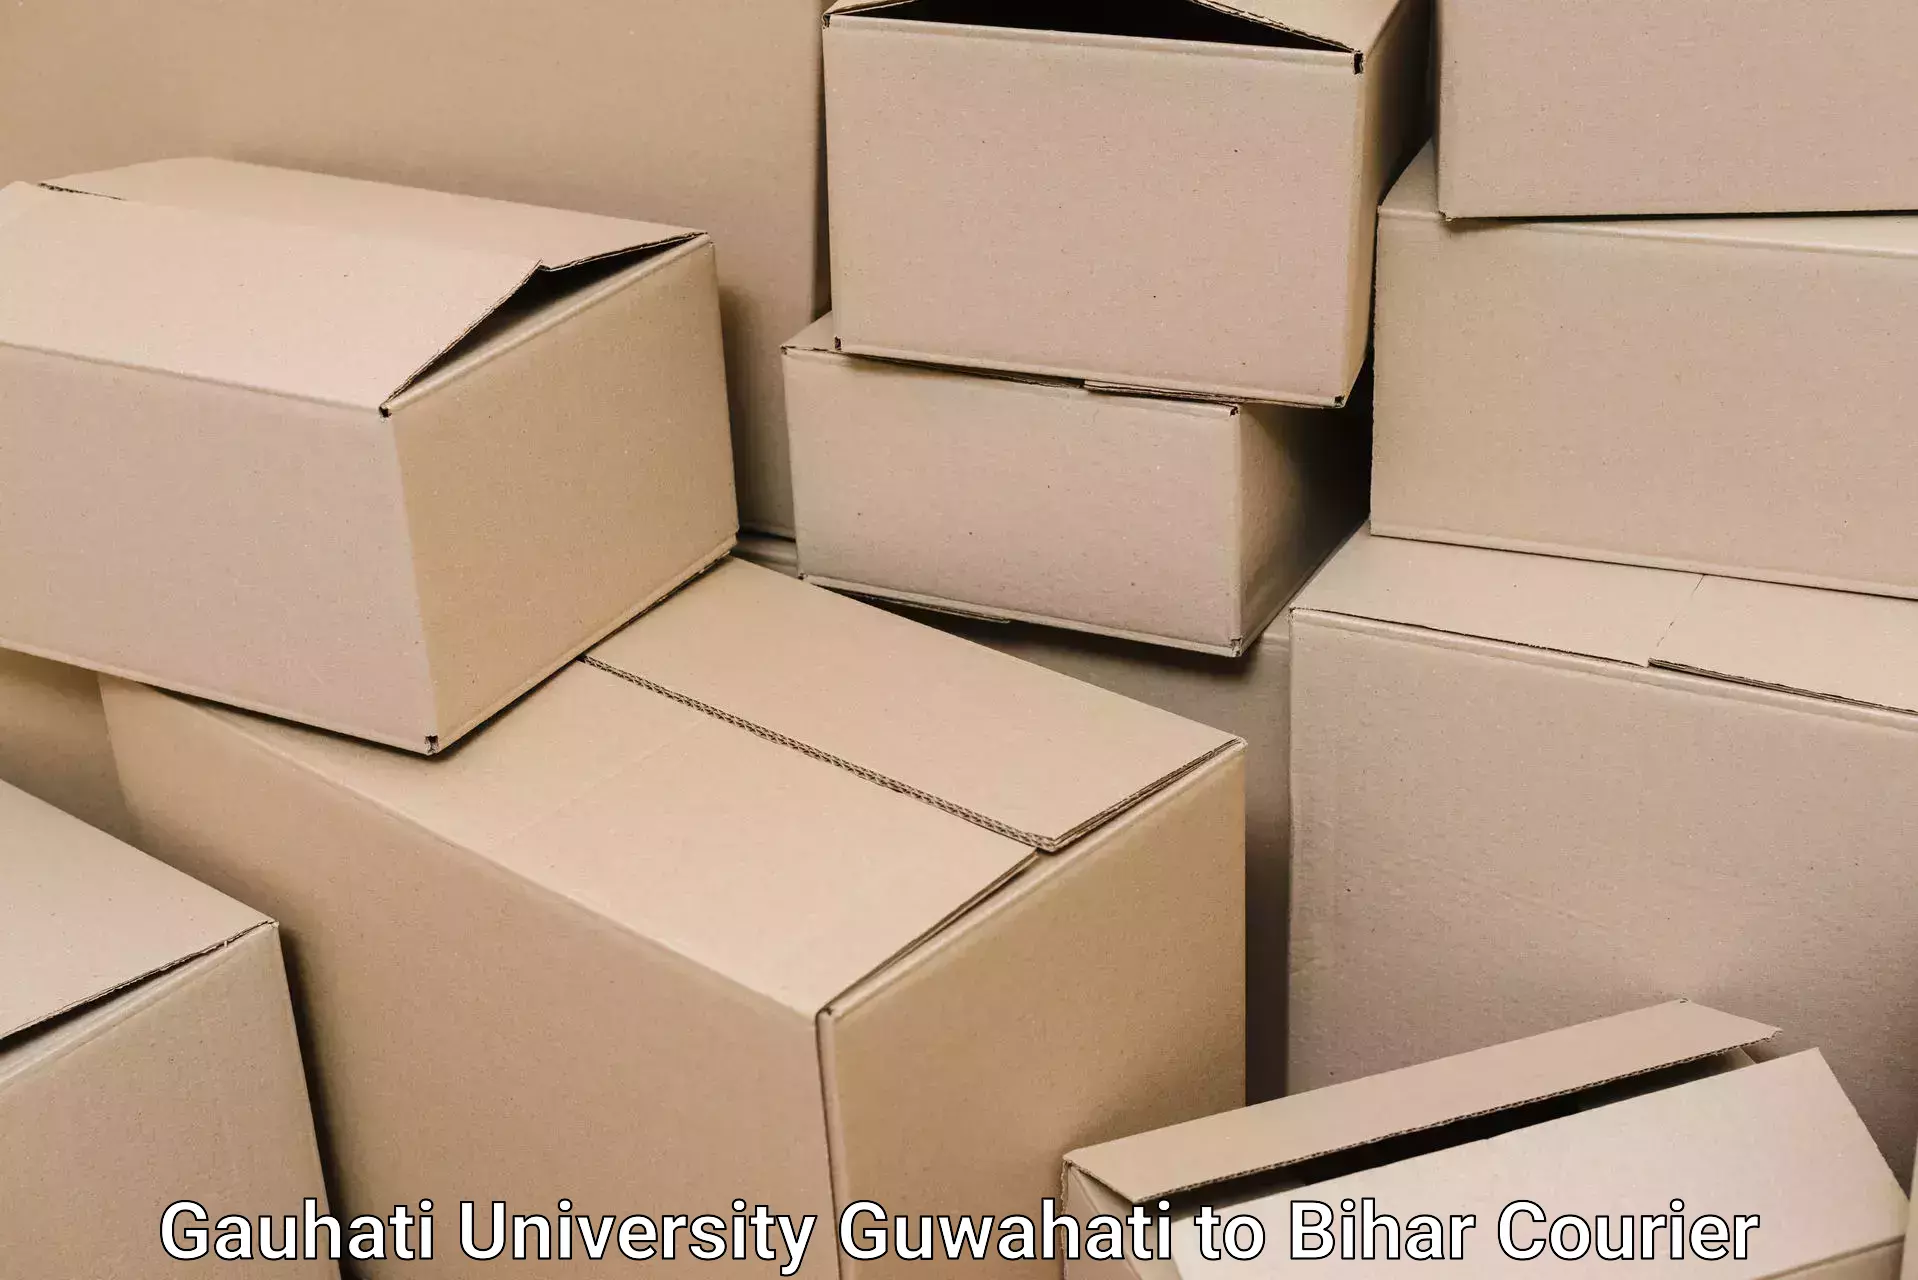 Furniture transport experts Gauhati University Guwahati to Bihar